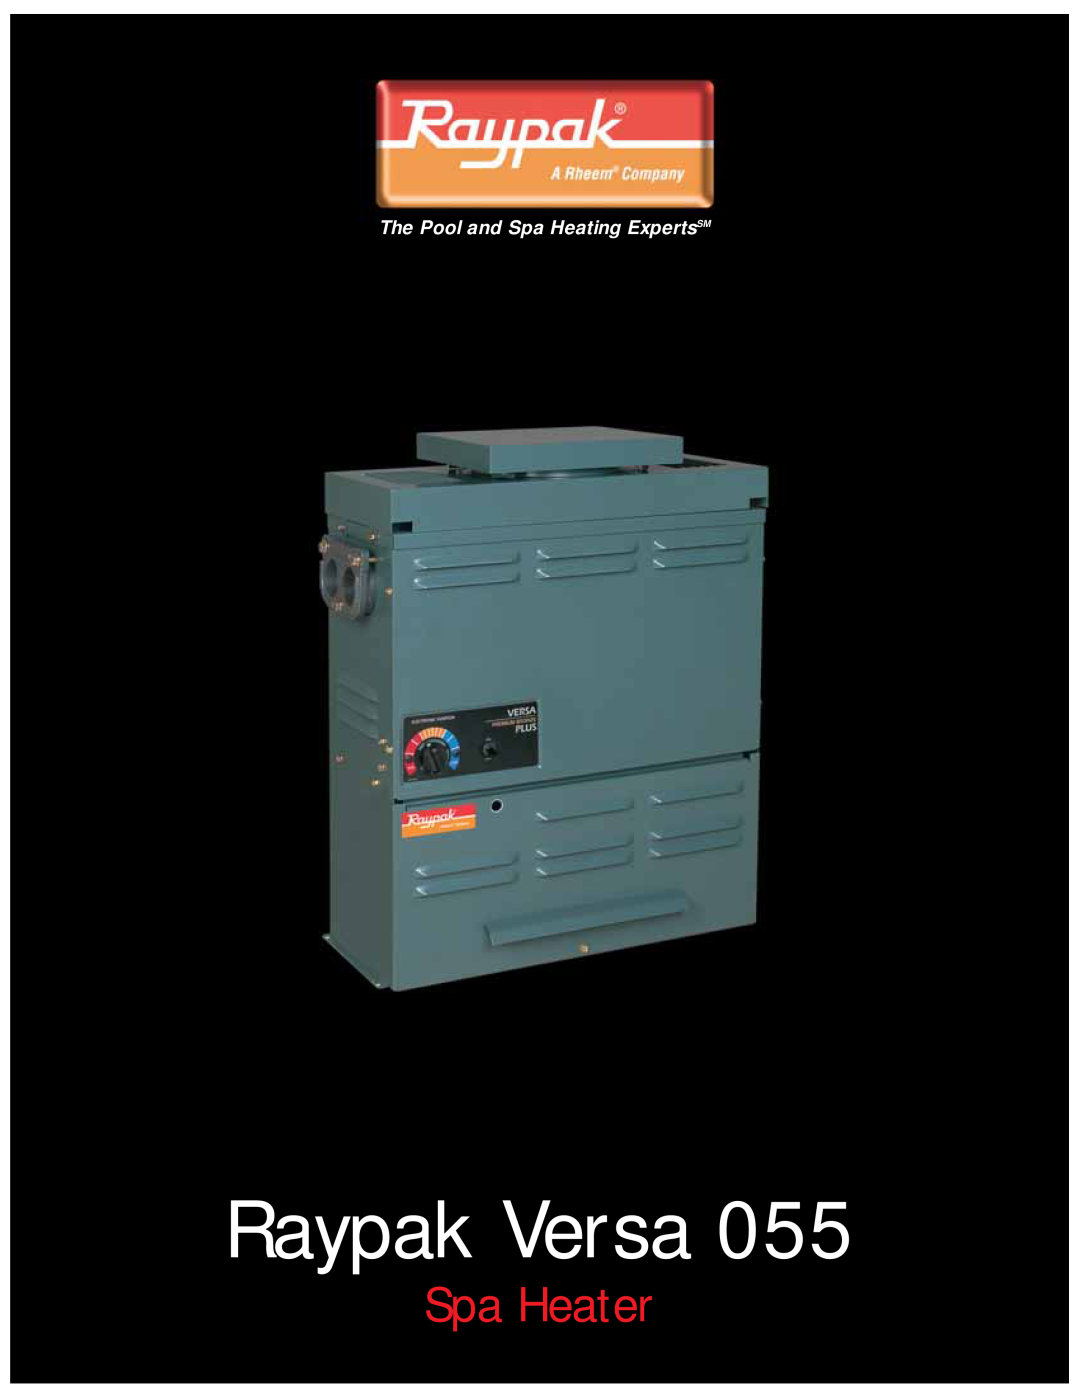 Raypak 055 manual Raypak Versa, Spa Heater, The Pool and Spa Heating ExpertsSM 